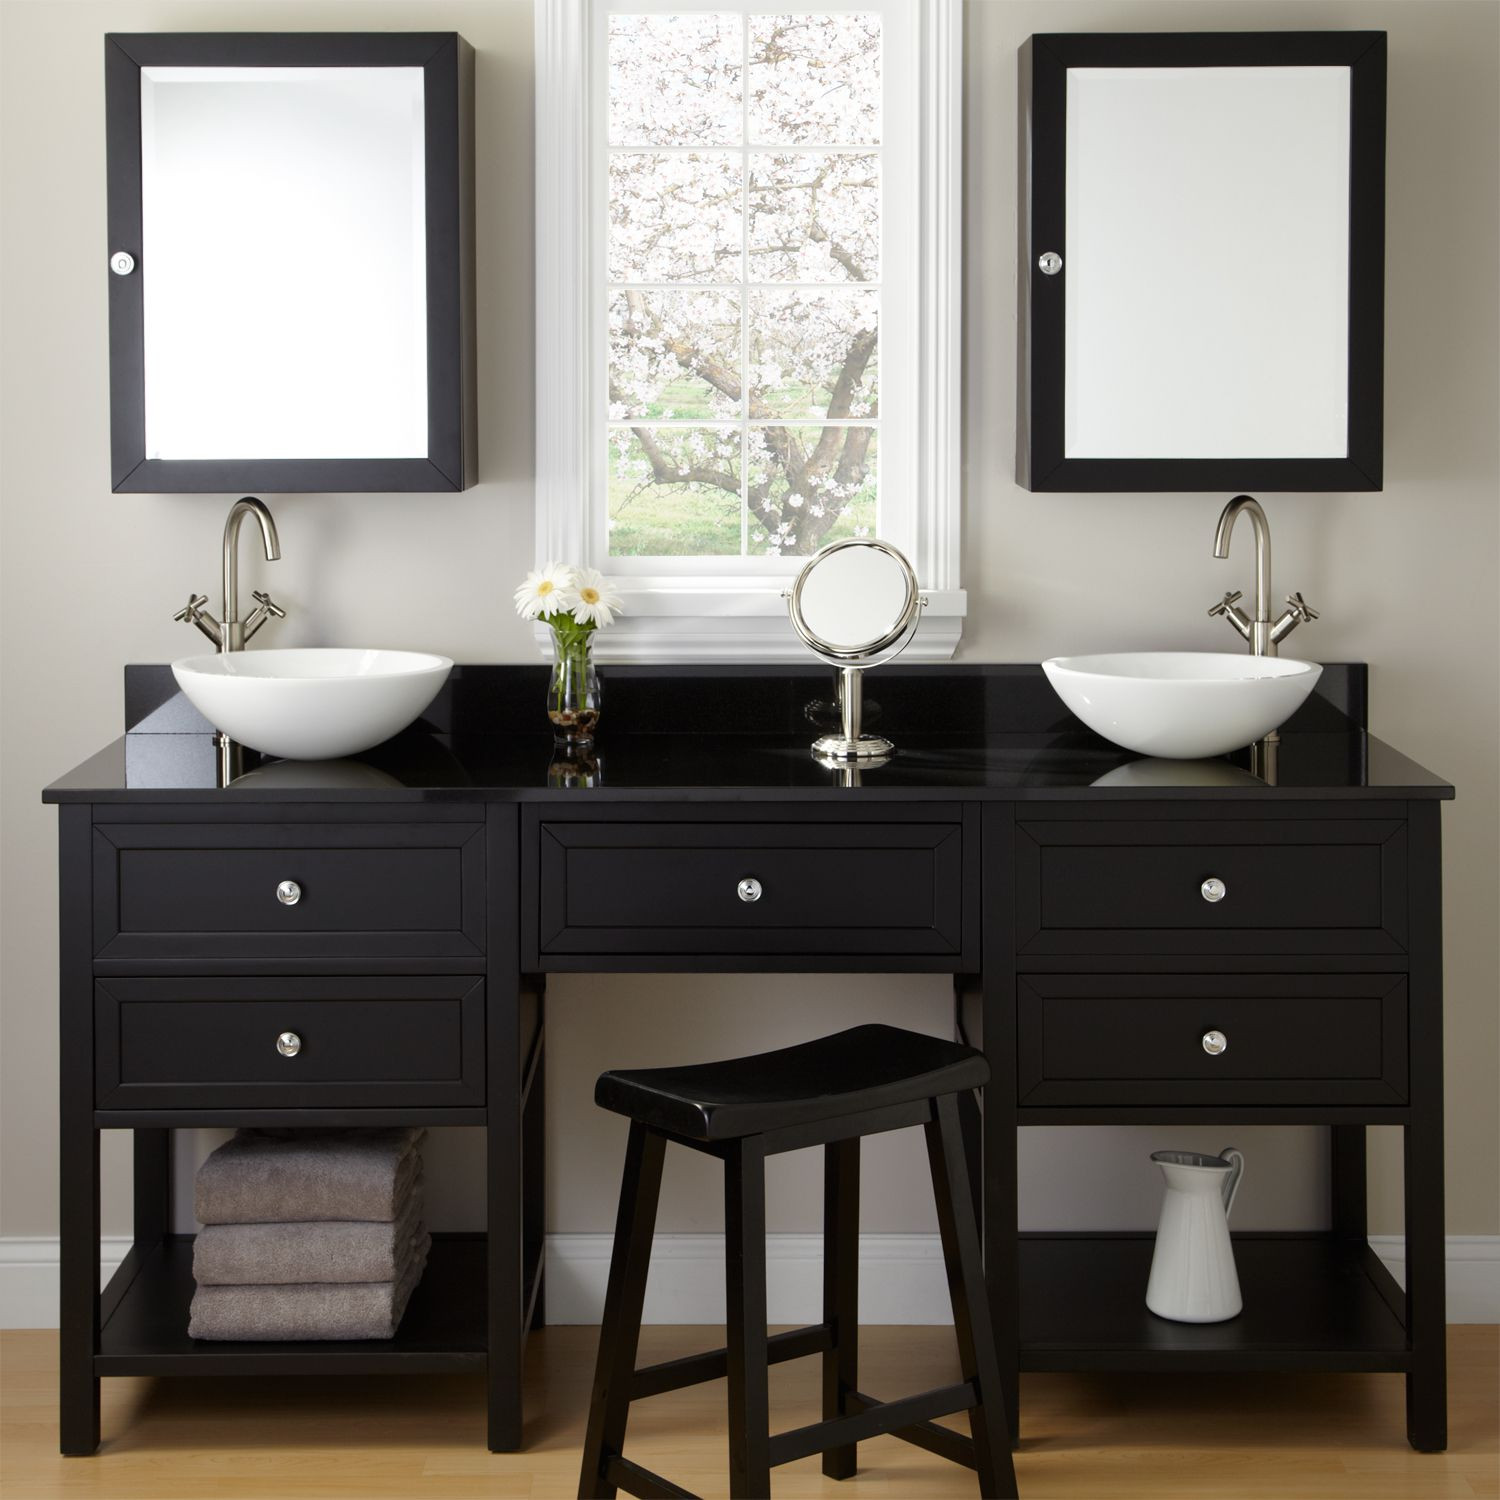 Bathroom Vanity Bowls
 Black Bathroom Vanity Achieving the Finest Classy Accent